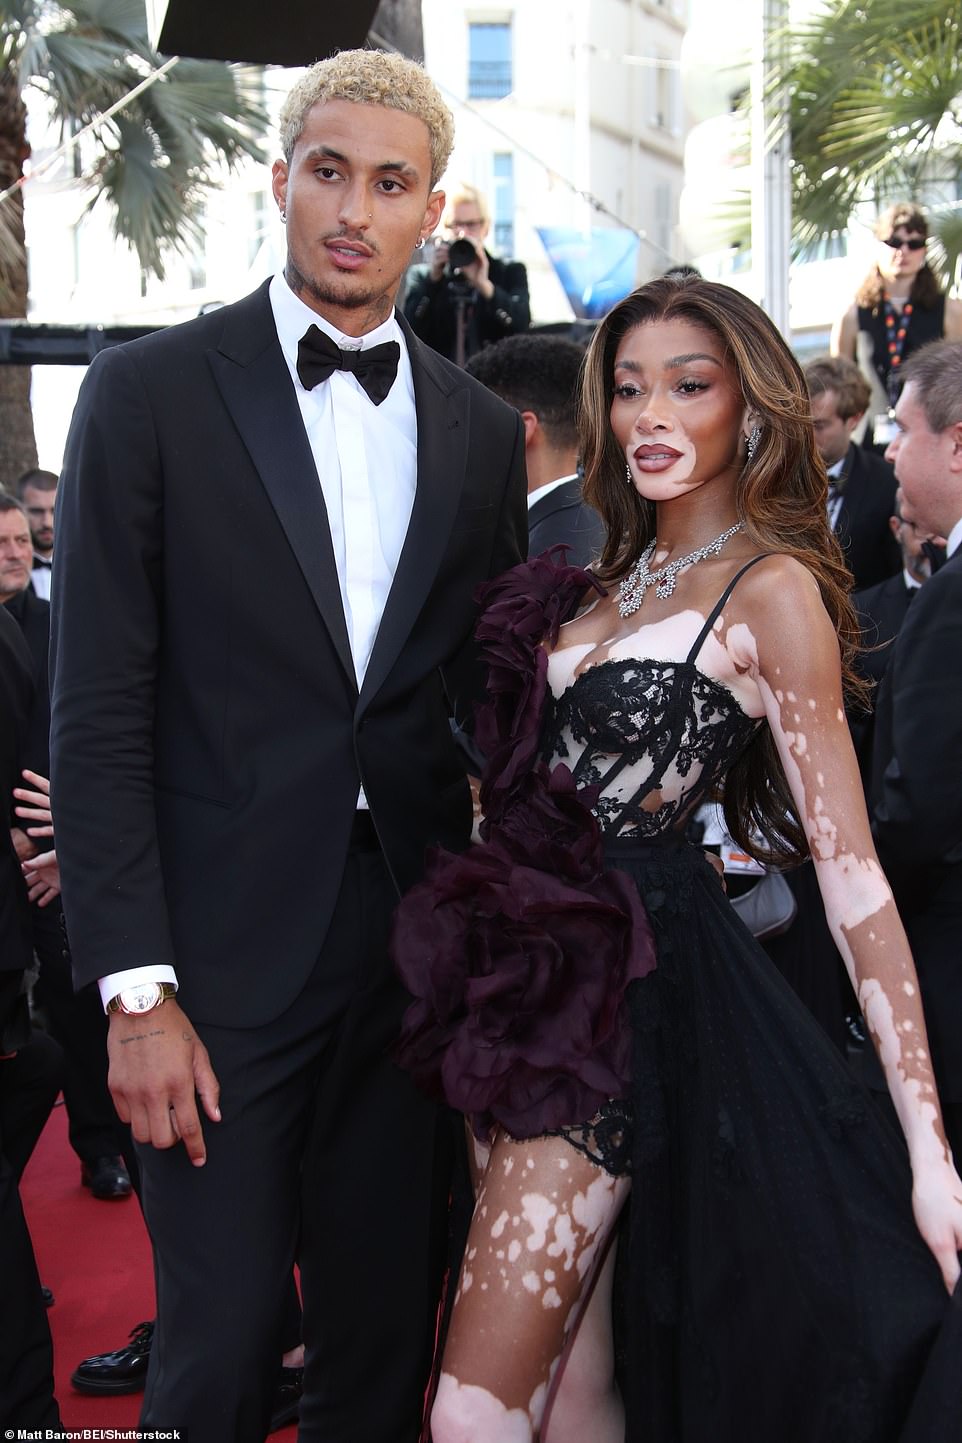 The NBA superstar, 28, cut a dapper figure alongside his long-term girlfriend, wearing a black tuxedo with a collared shirt and matching bowtie